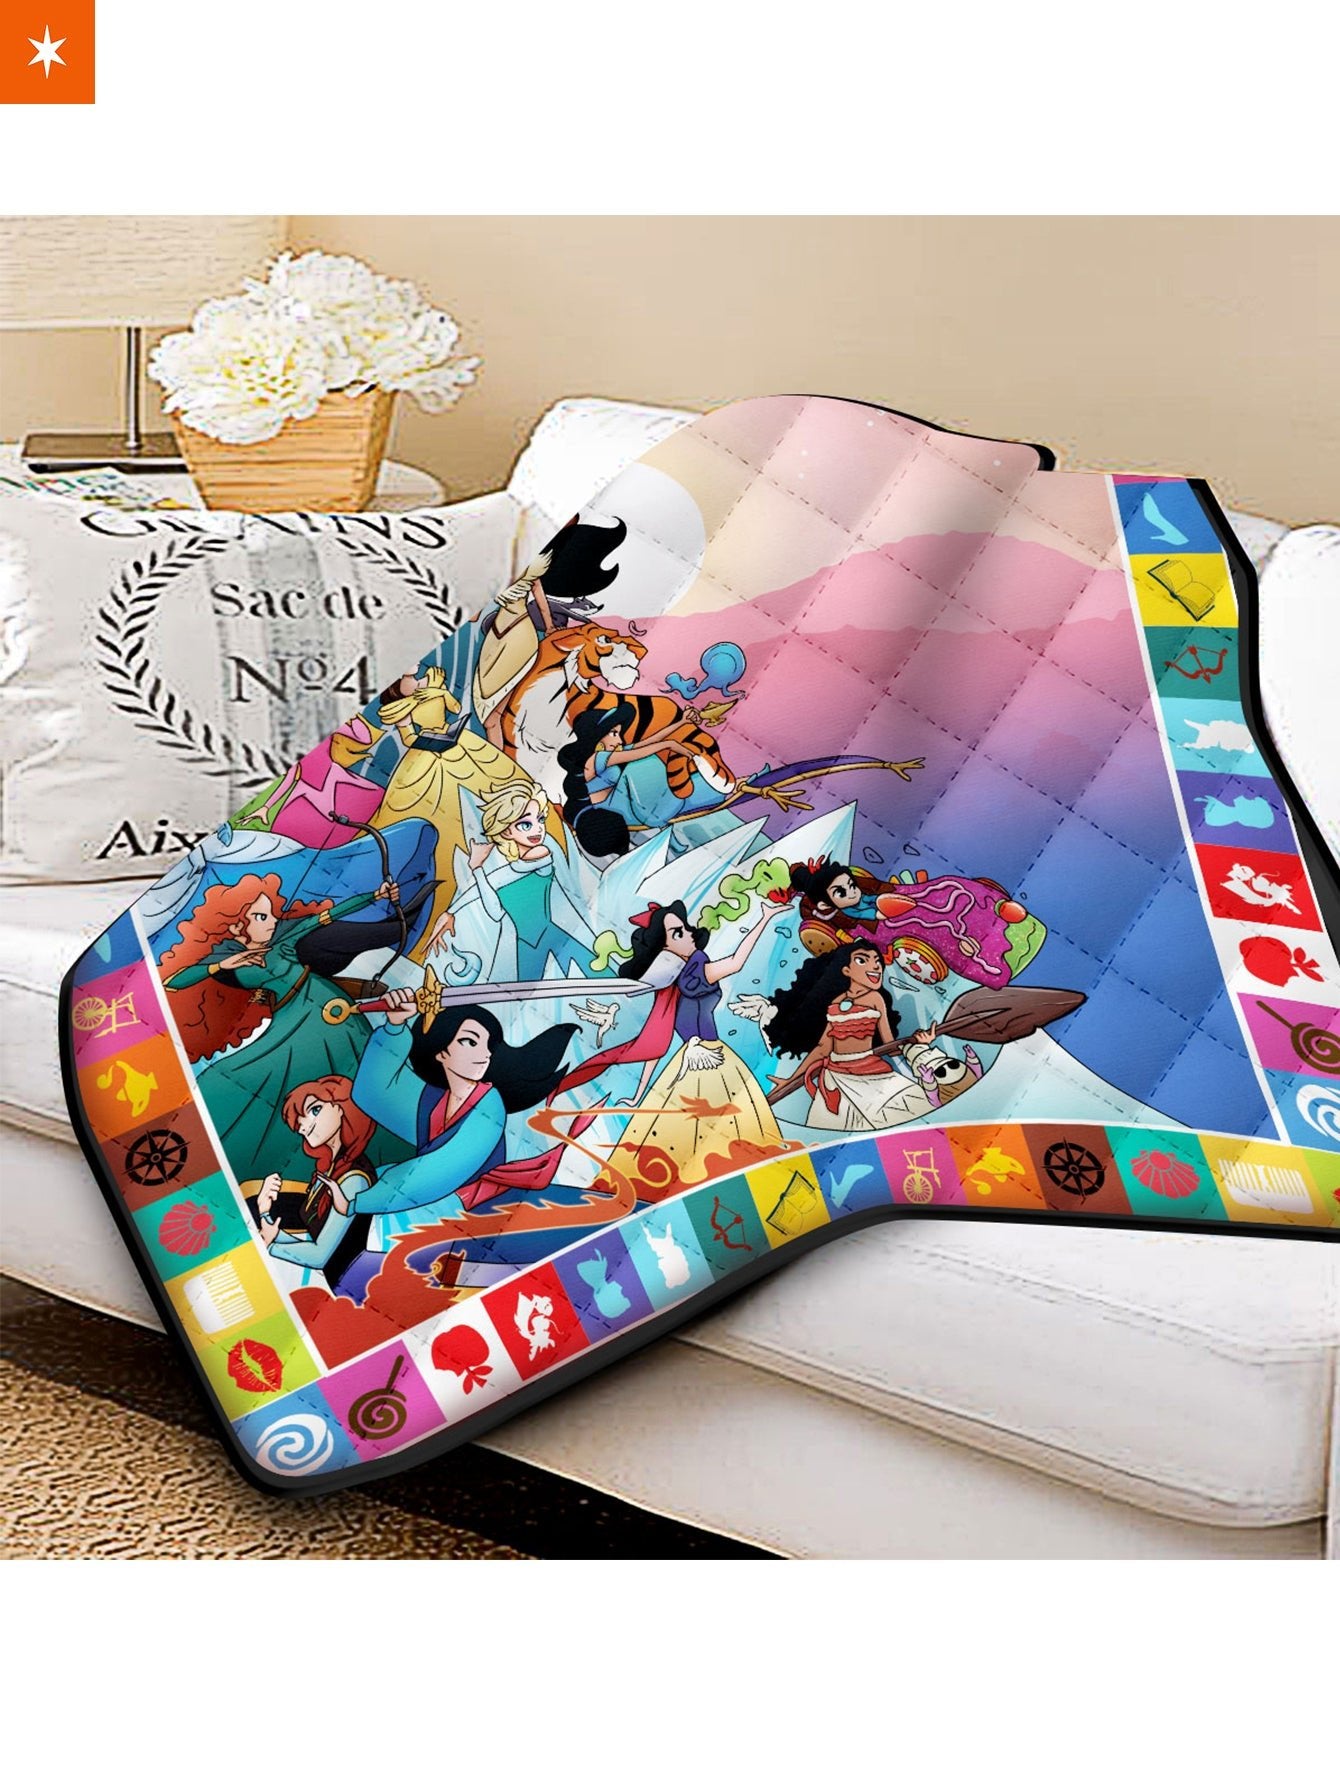 Fandomaniax - Disney Princesses Quilt Blanket